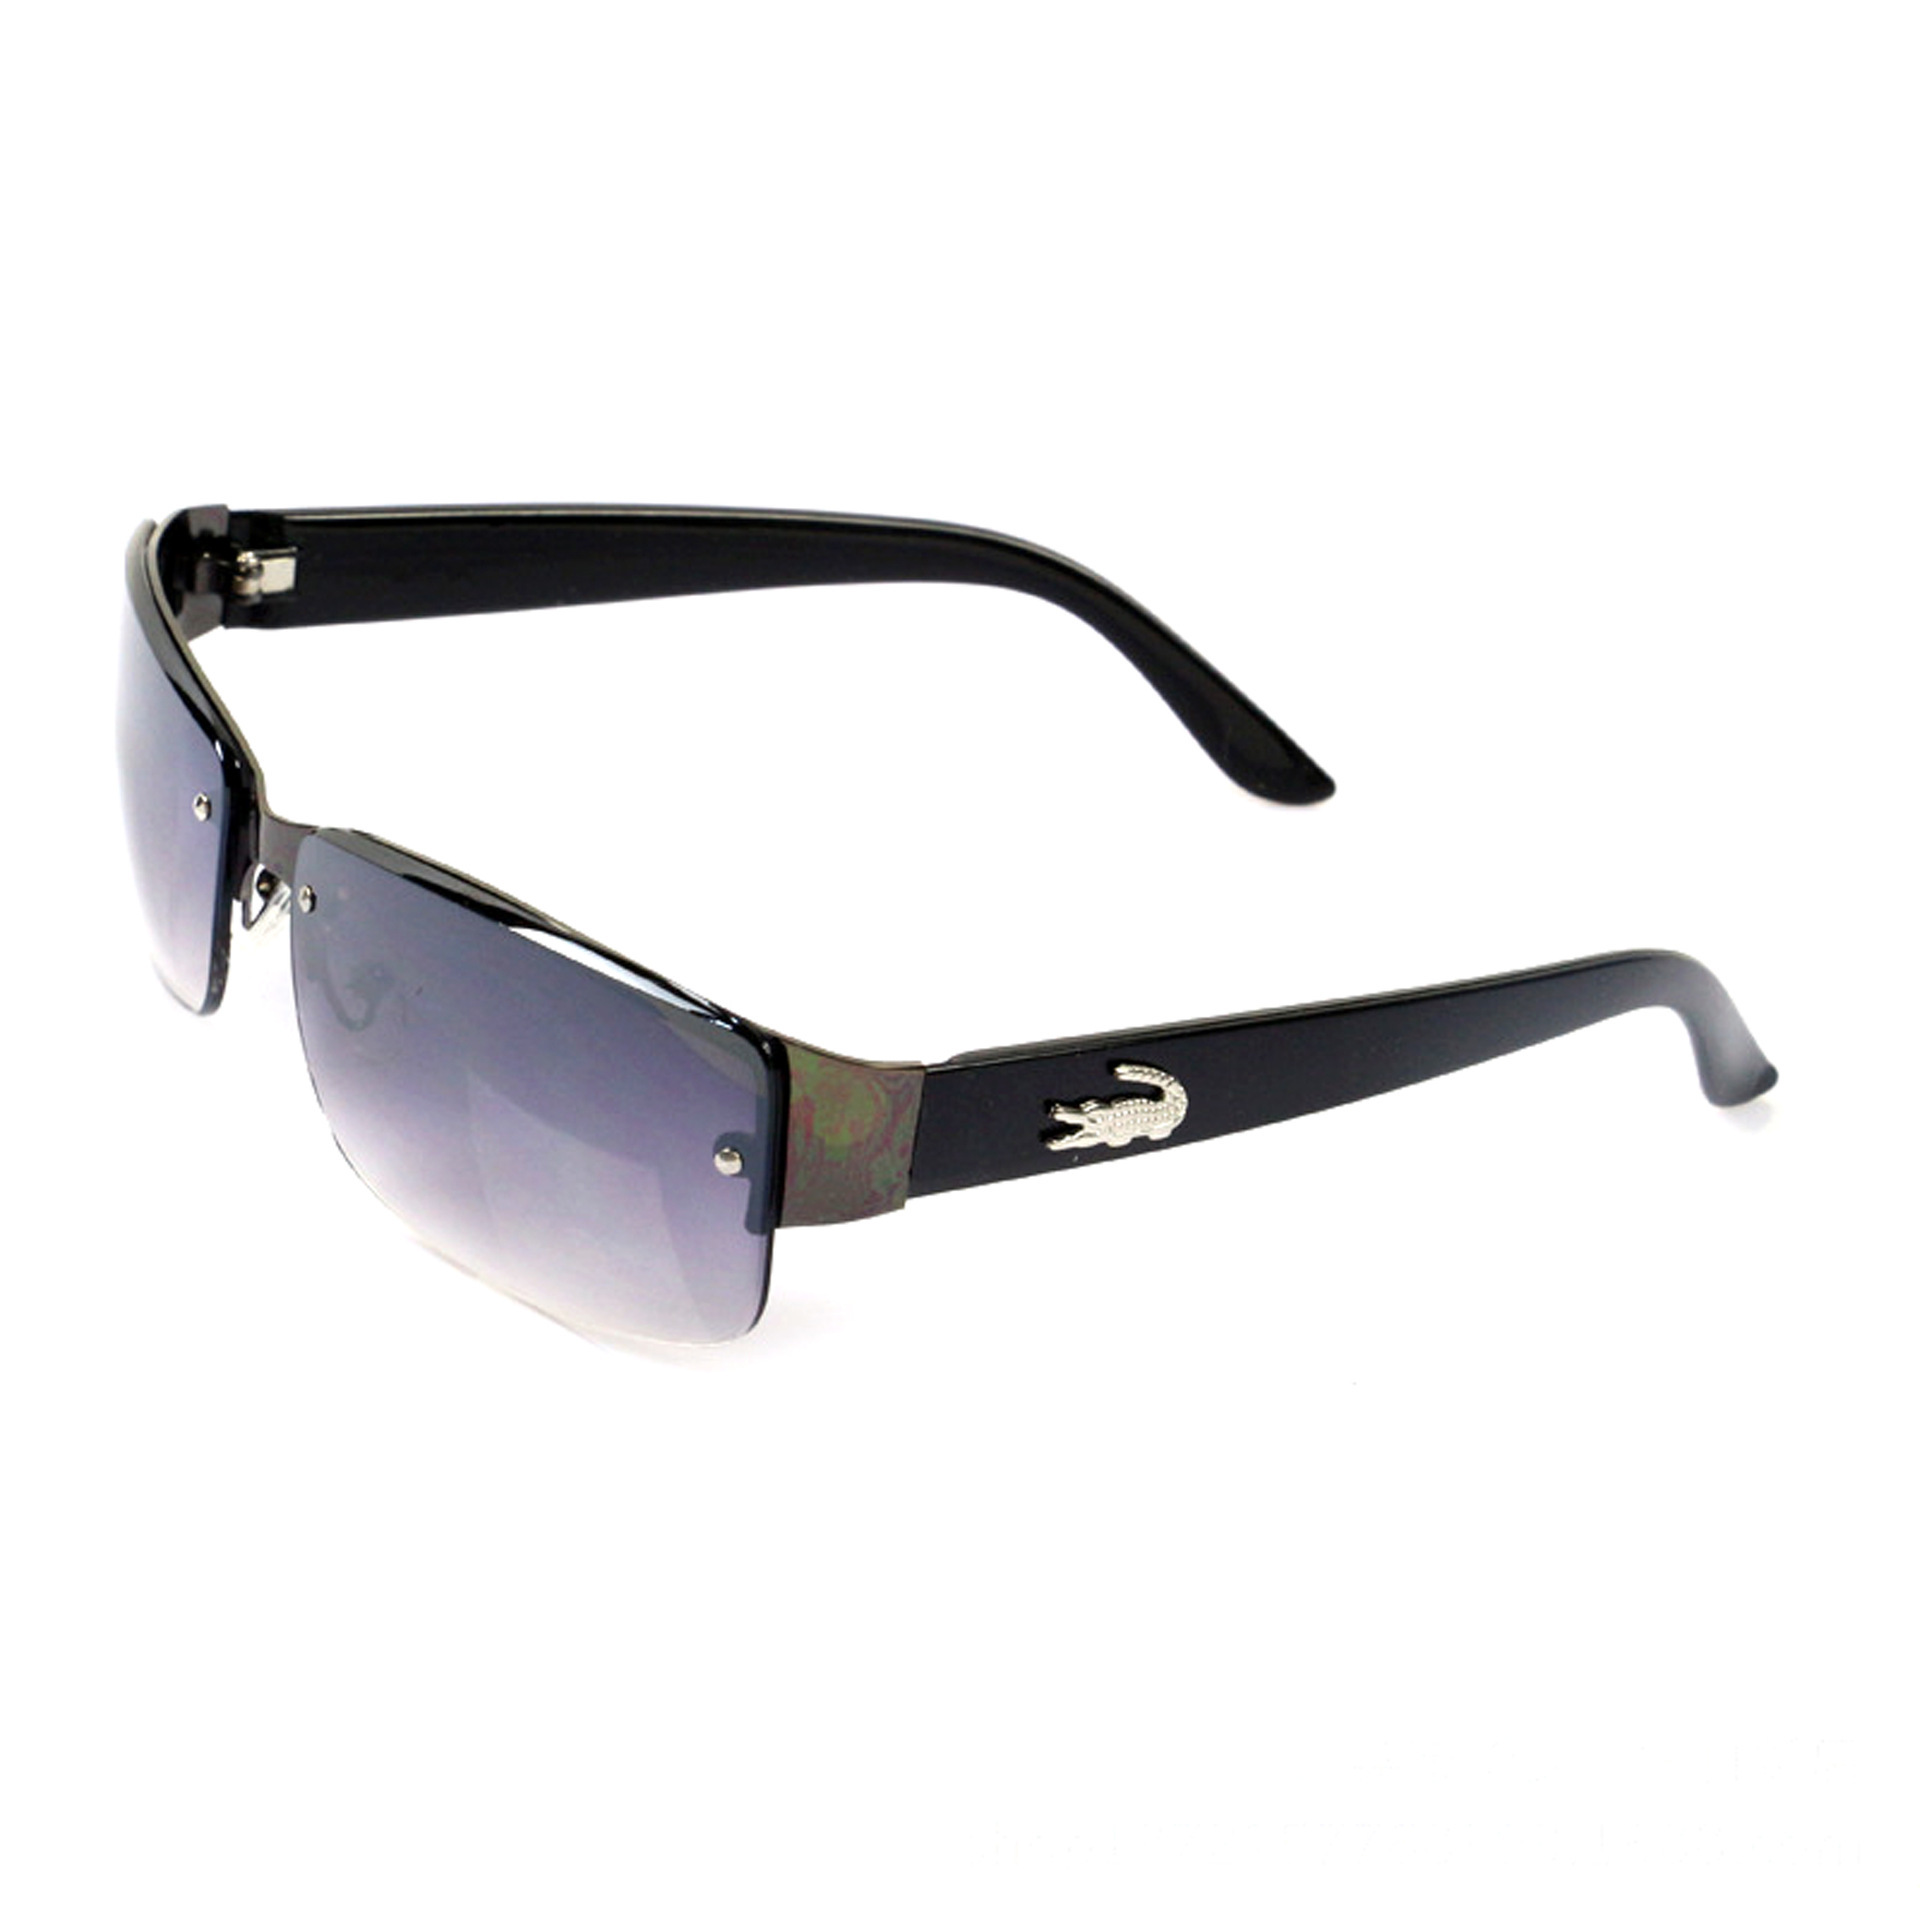 2015 new fashion sunglasses women and men sunglasses anti uv 400 vintage sunglasses style goggle glasses